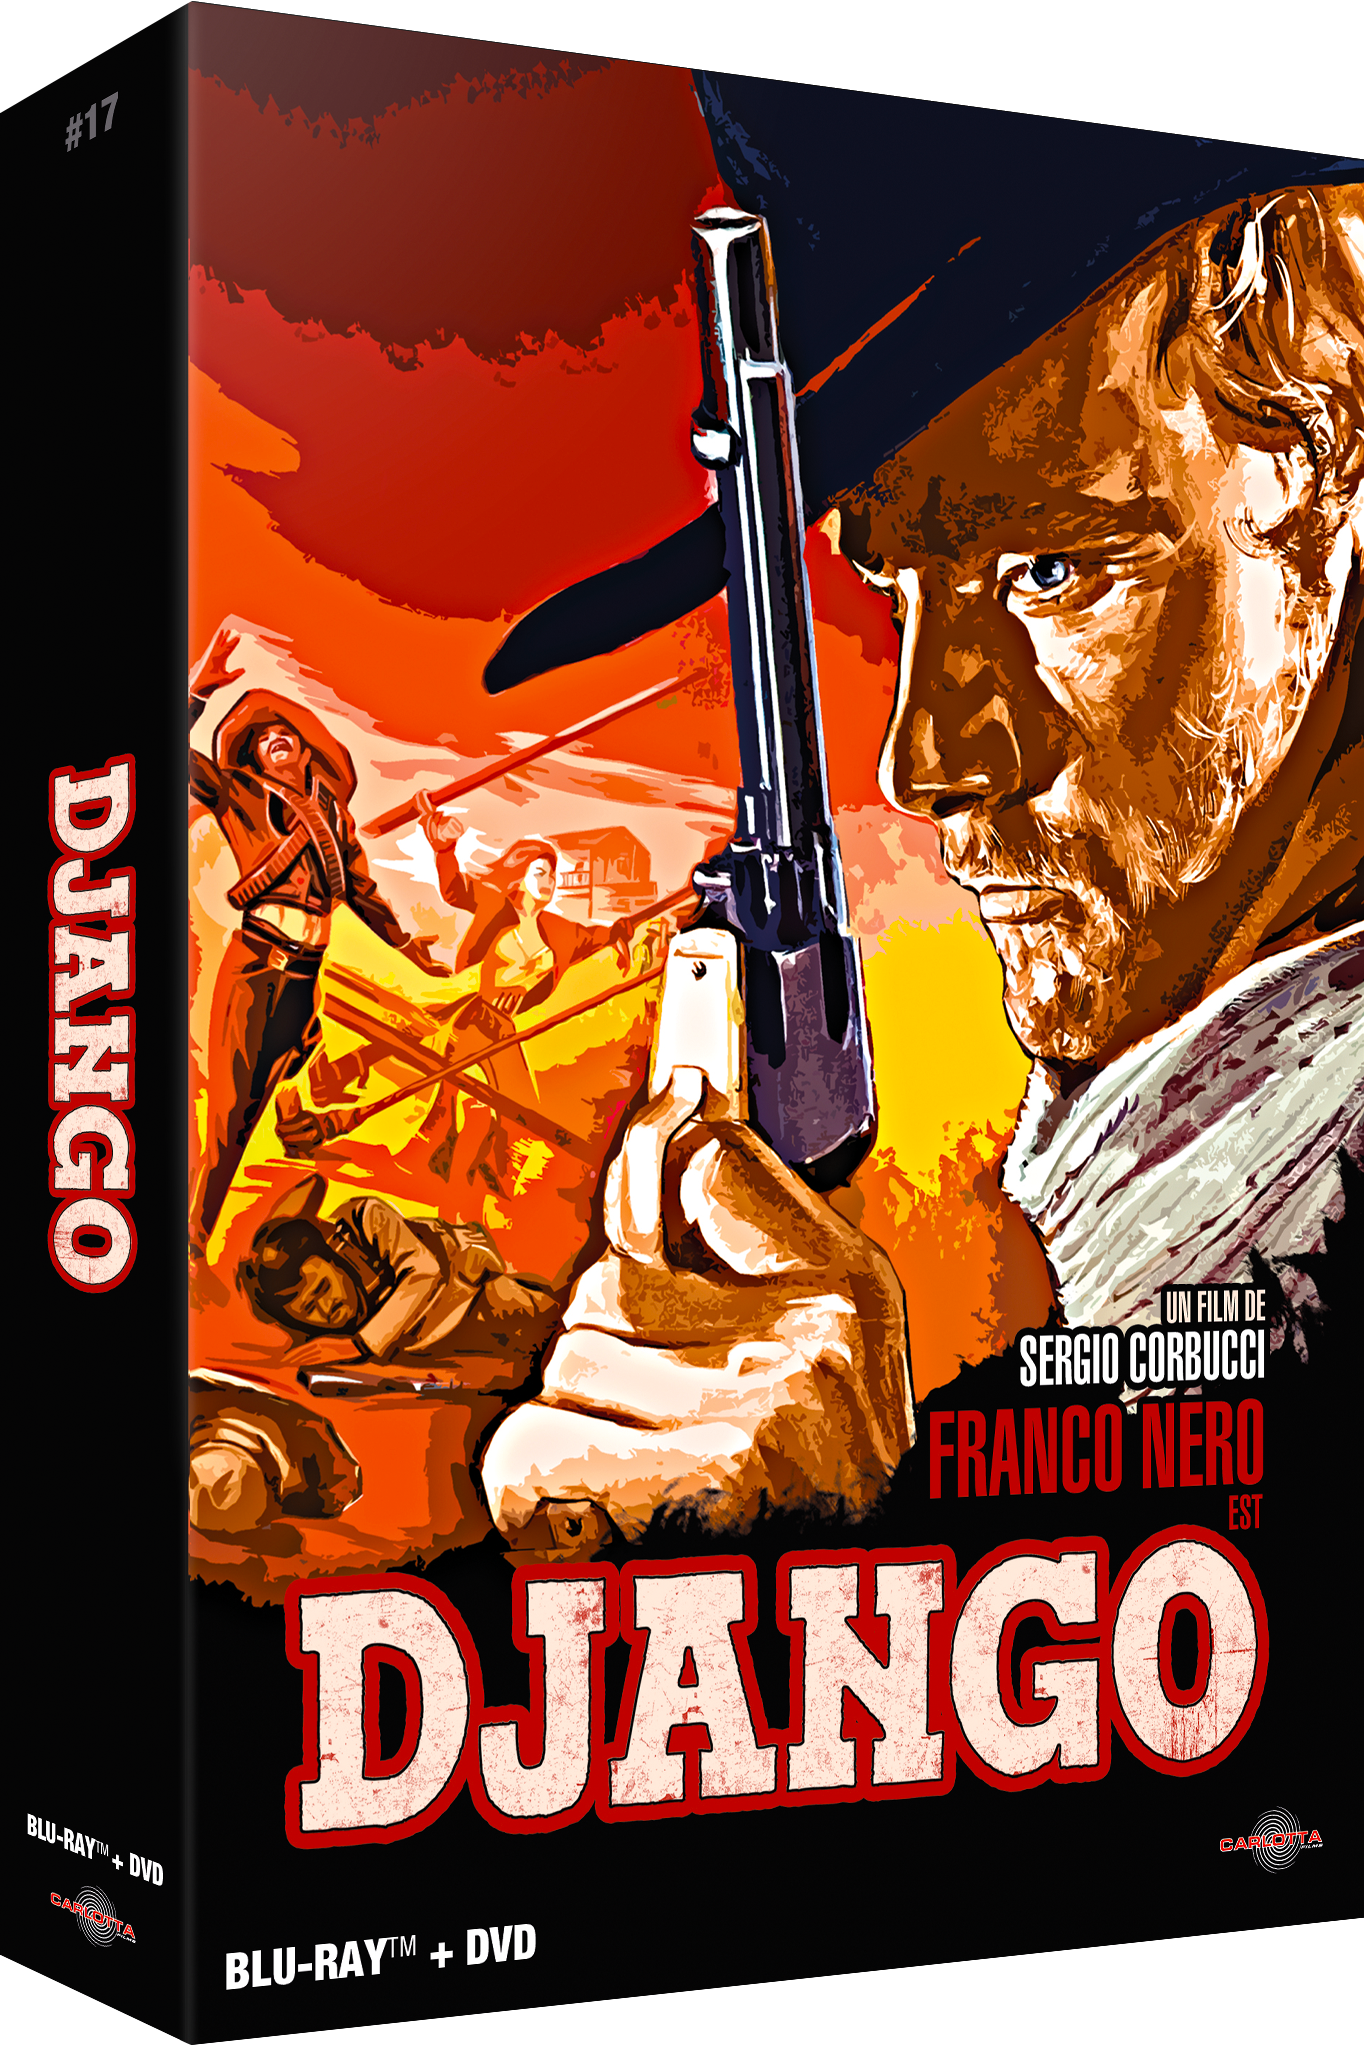 Django - Prestige Limited Edition Combo Blu-ray + DVD + Memorabilia